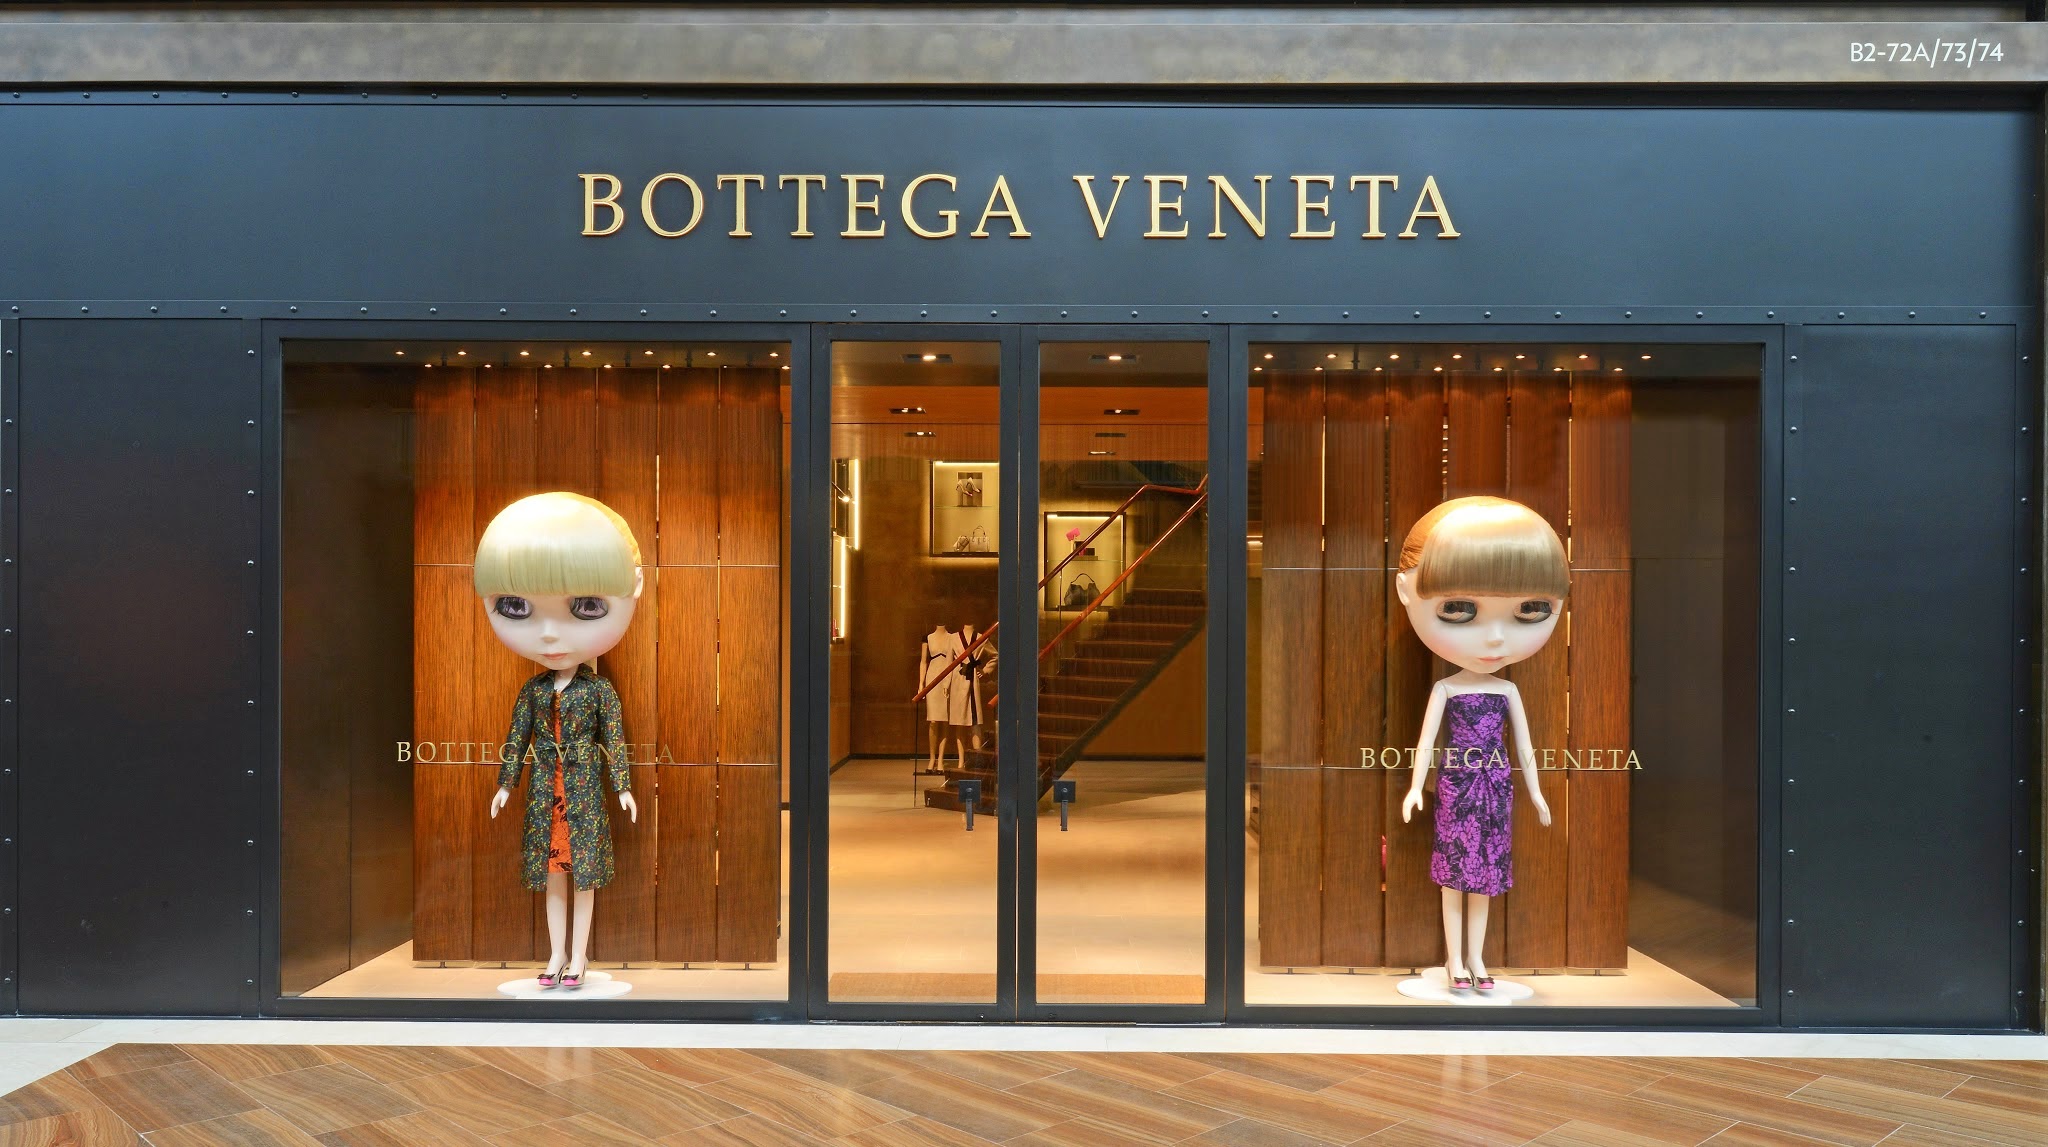 Event Post: Bottega Veneta's Store Re-Opening at Marina Bay Sands